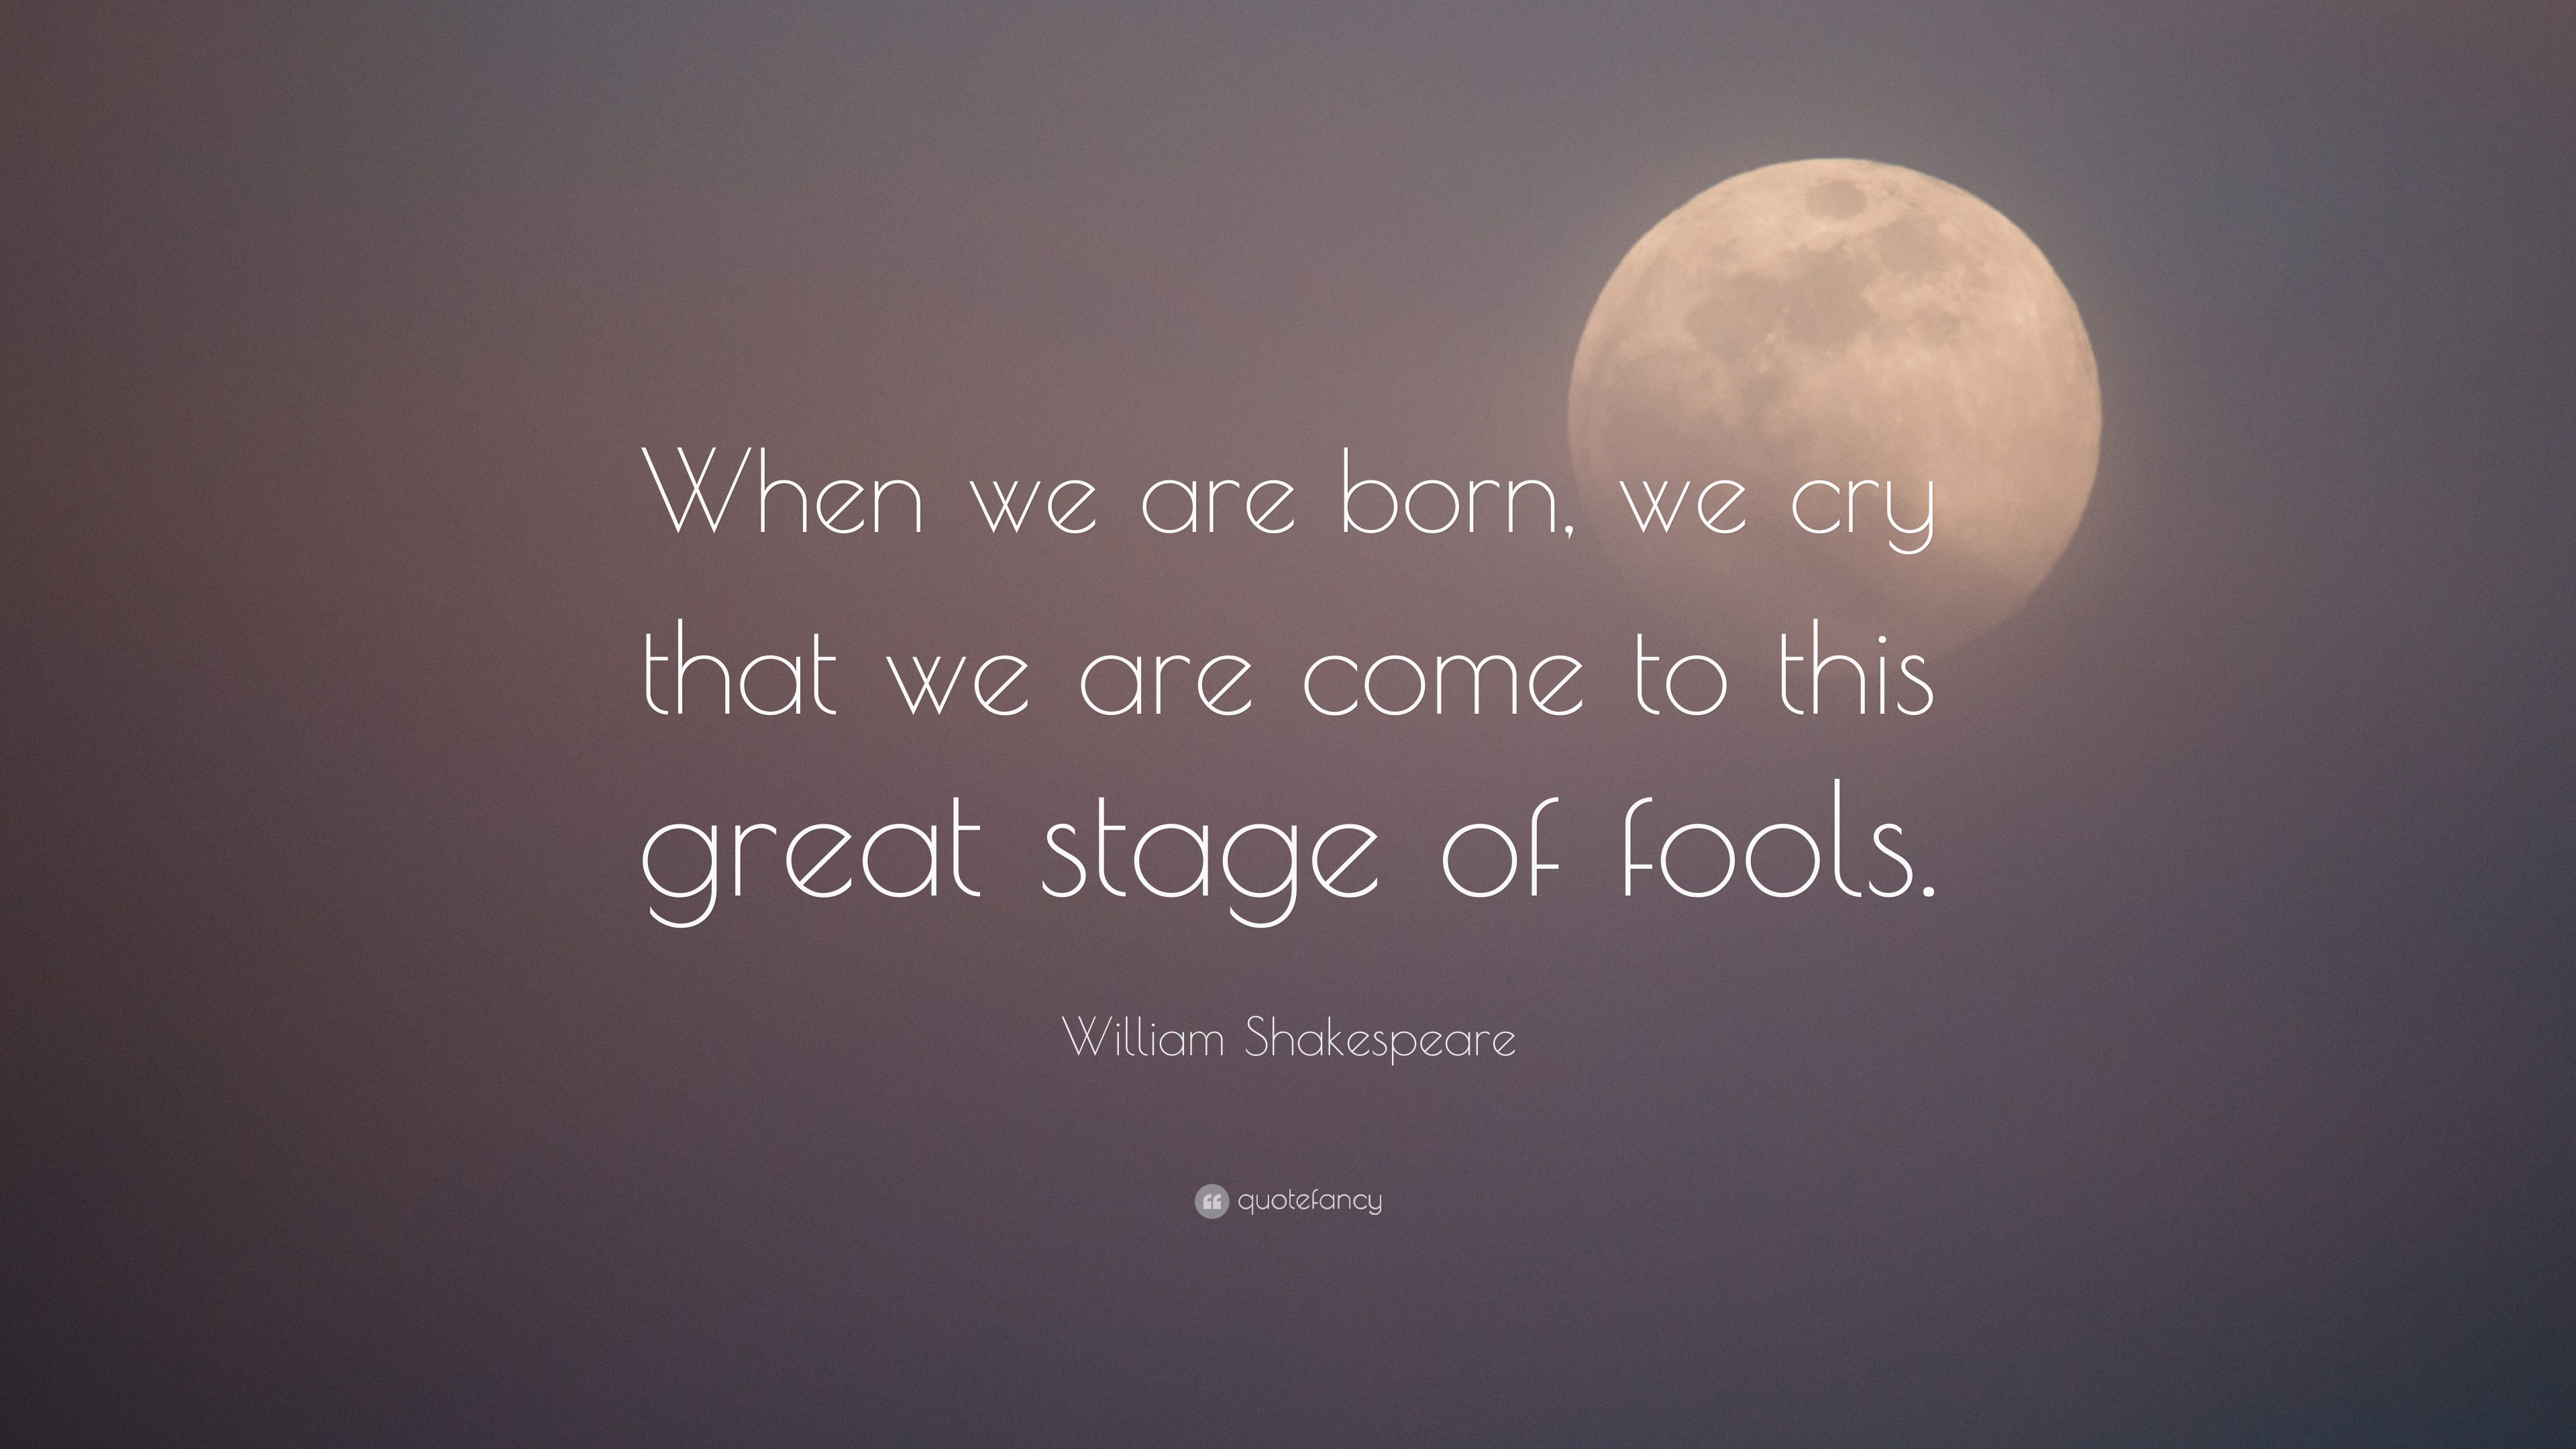 william shakespeare quote about life william shakespeare quote u201cwhen we are born we cry that we are